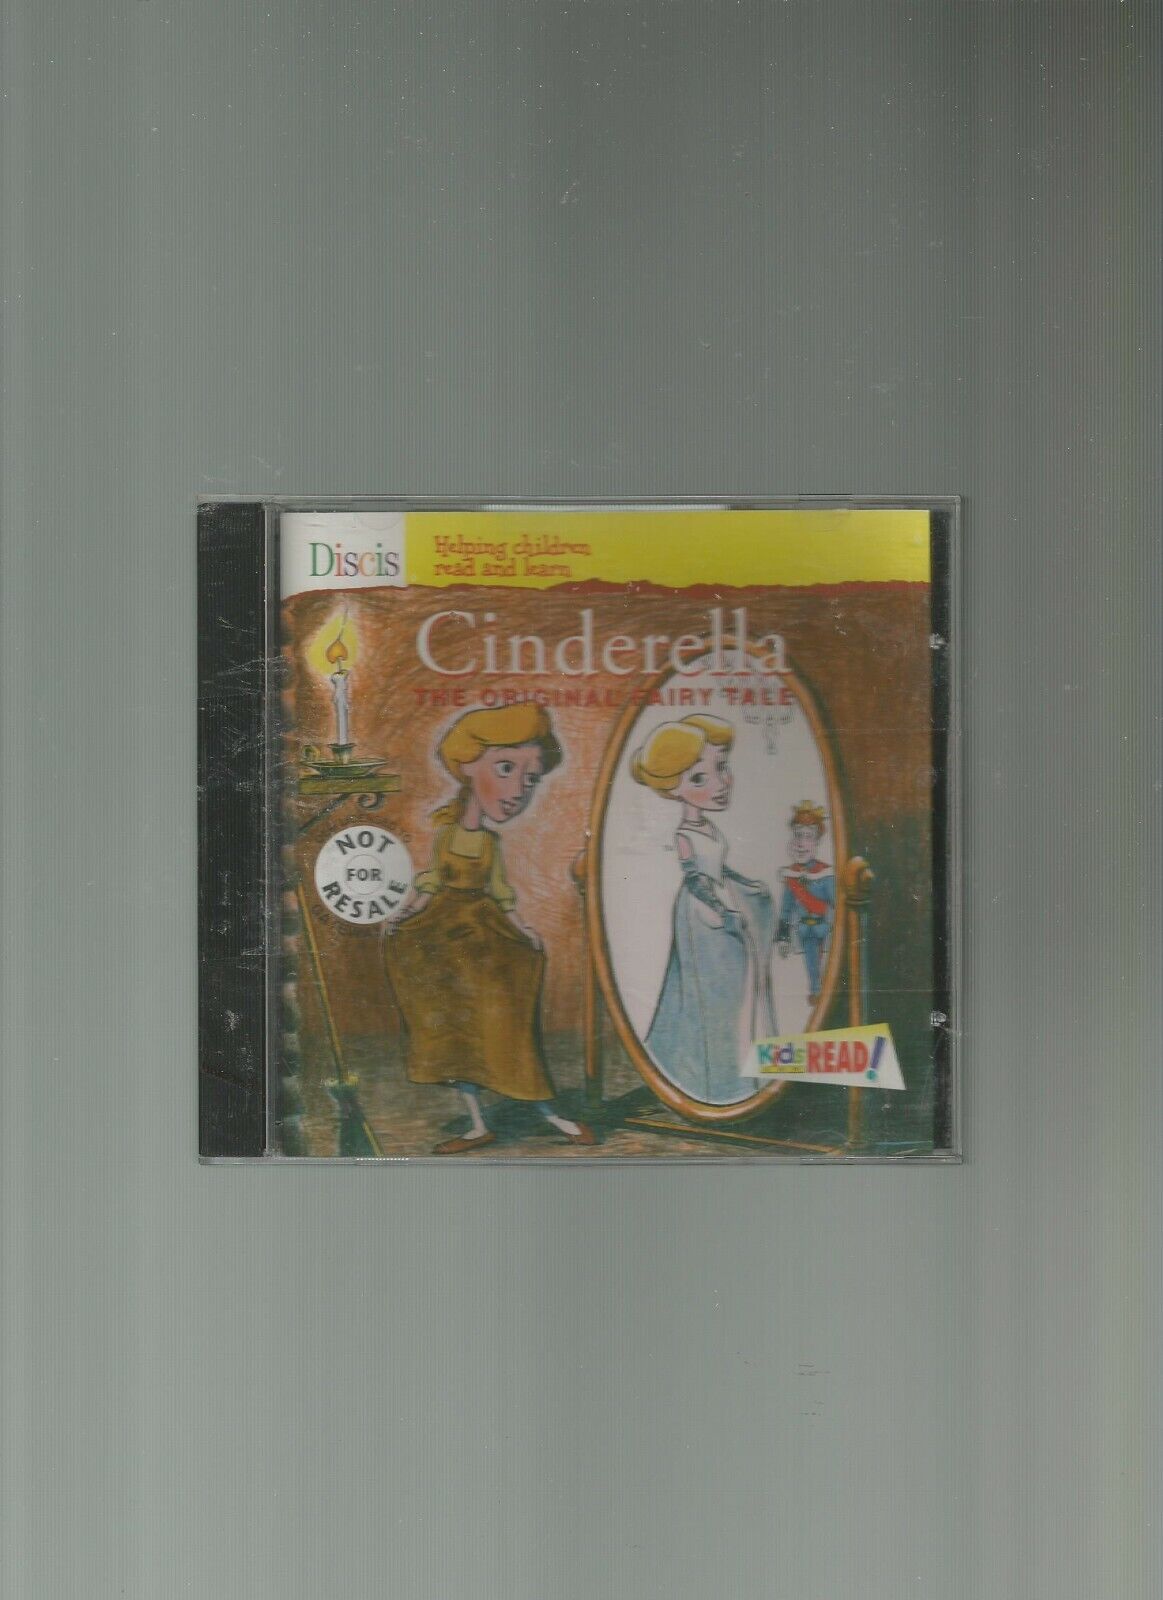 Discis Kids Can Read: Cinderella Original Fairy Tale ,CD-ROM, VG